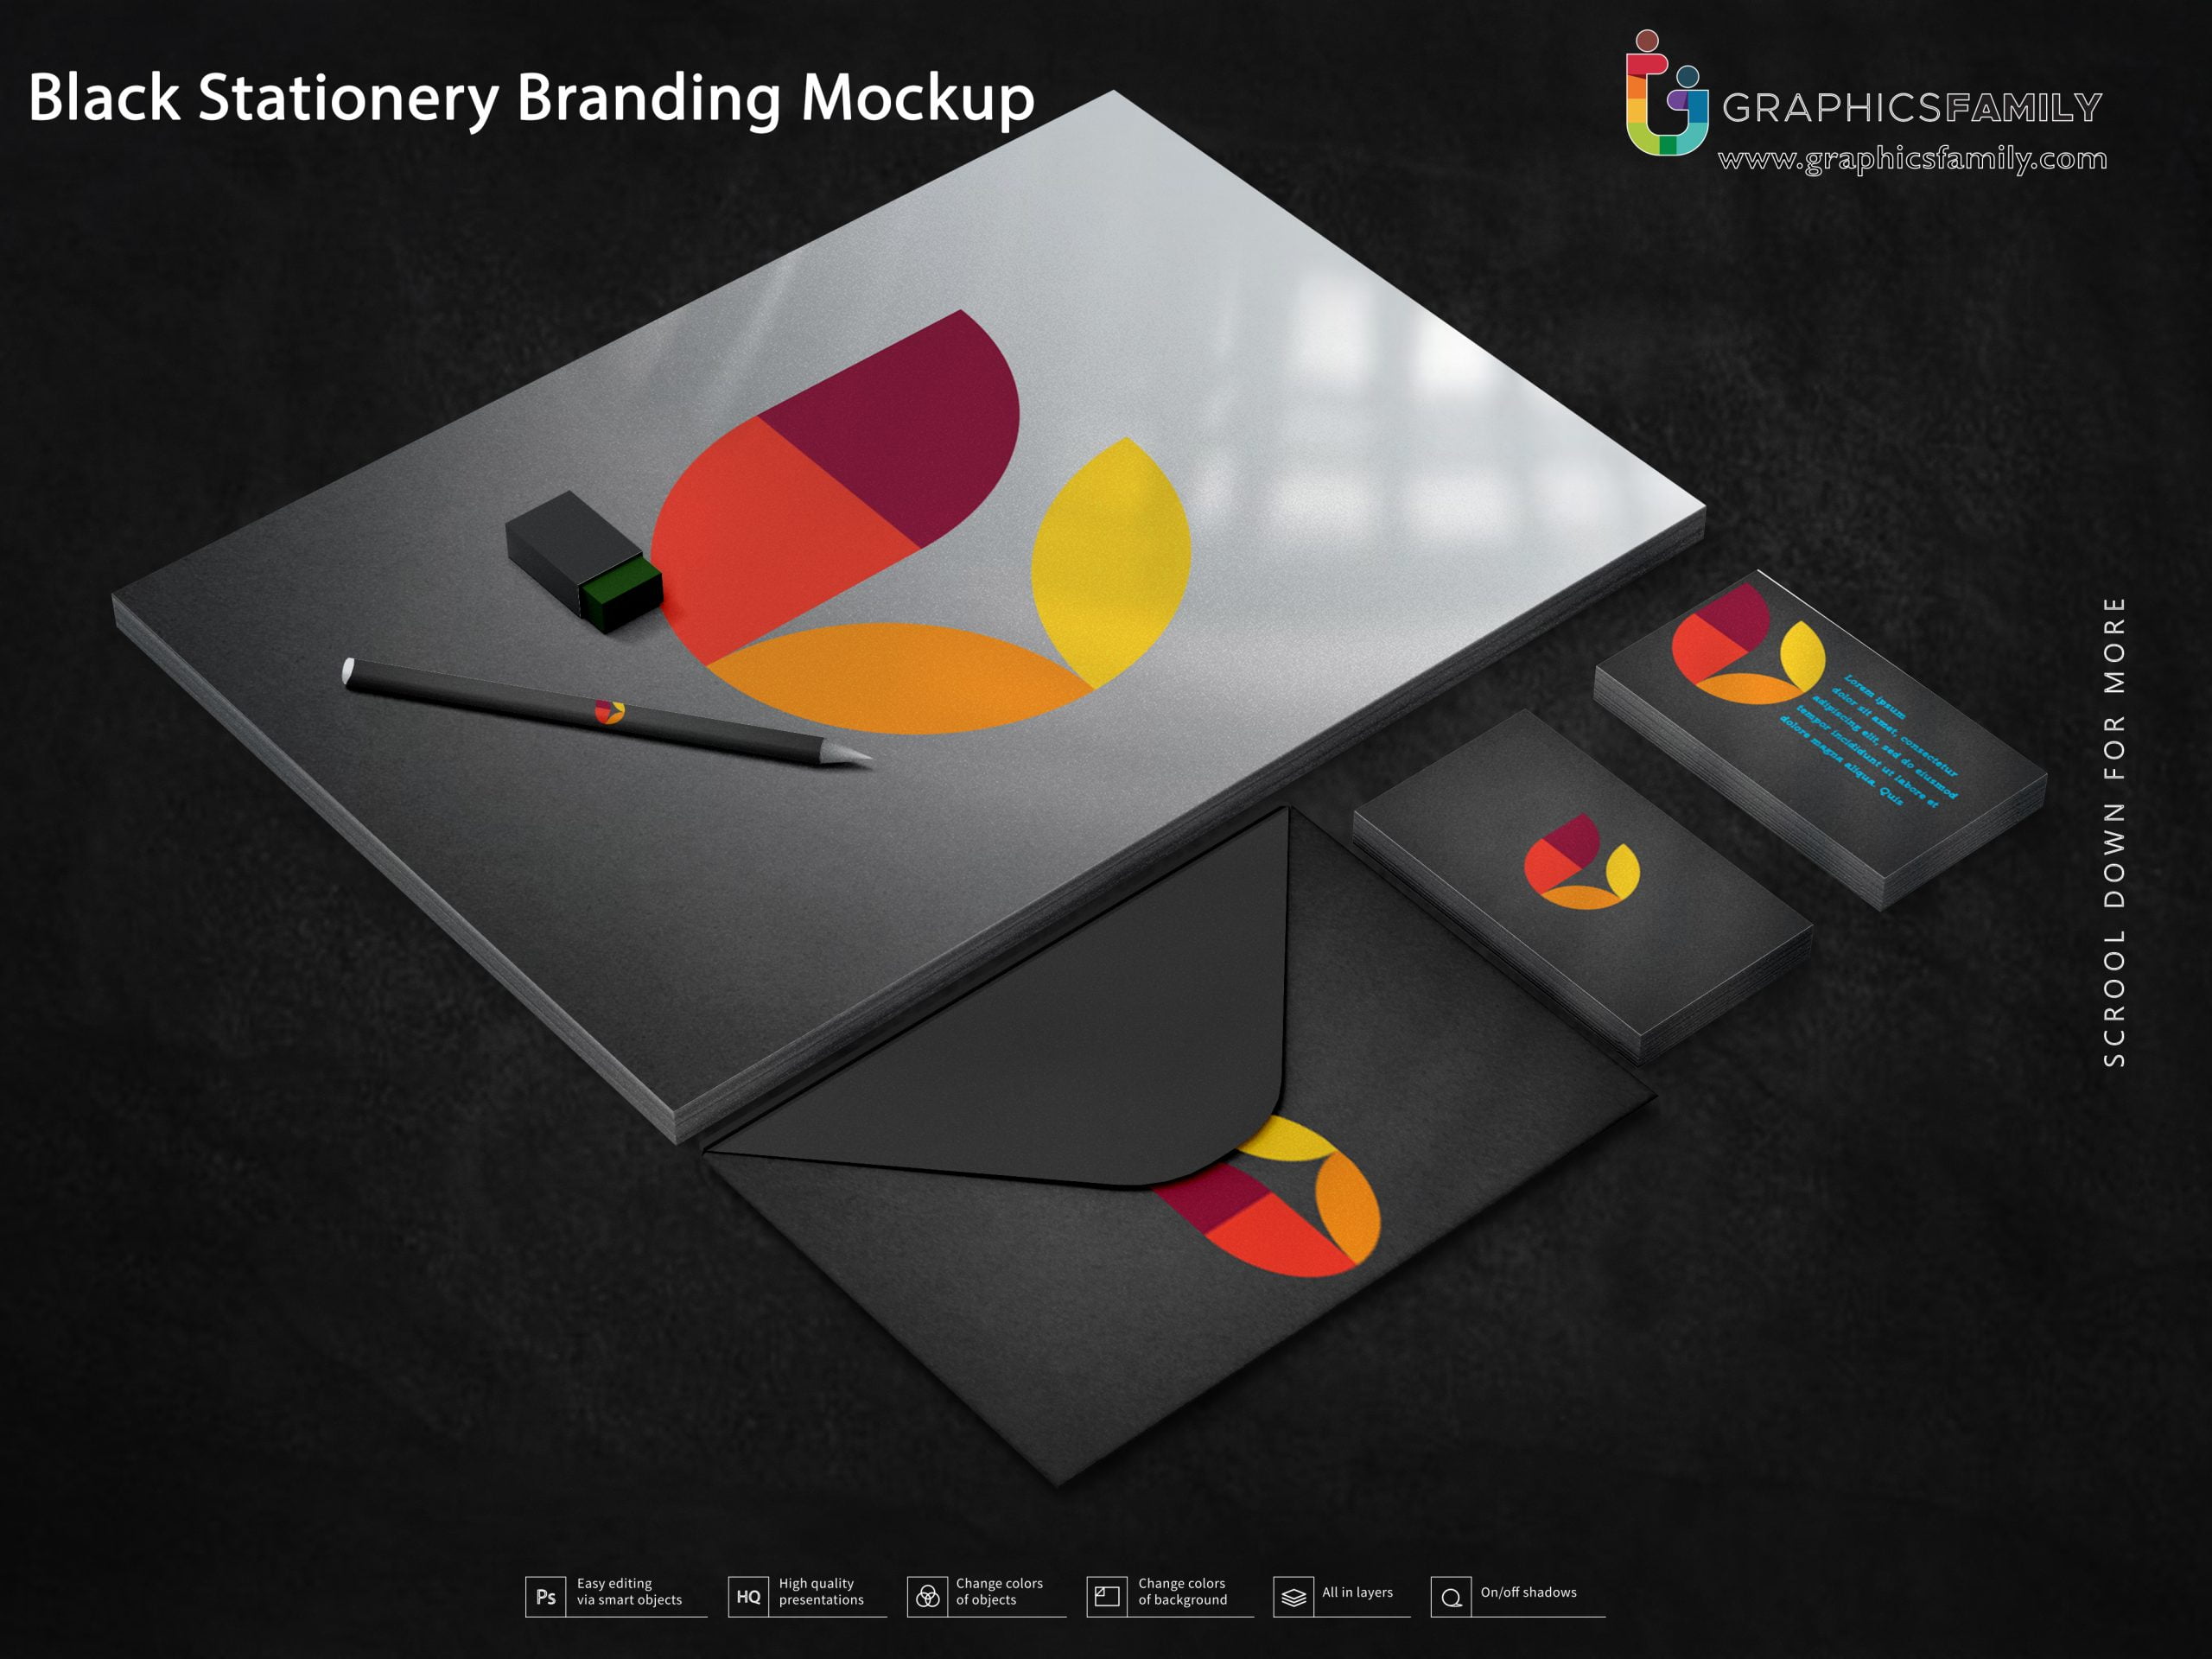 Download Black Stationery Branding Mockup - GraphicsFamily